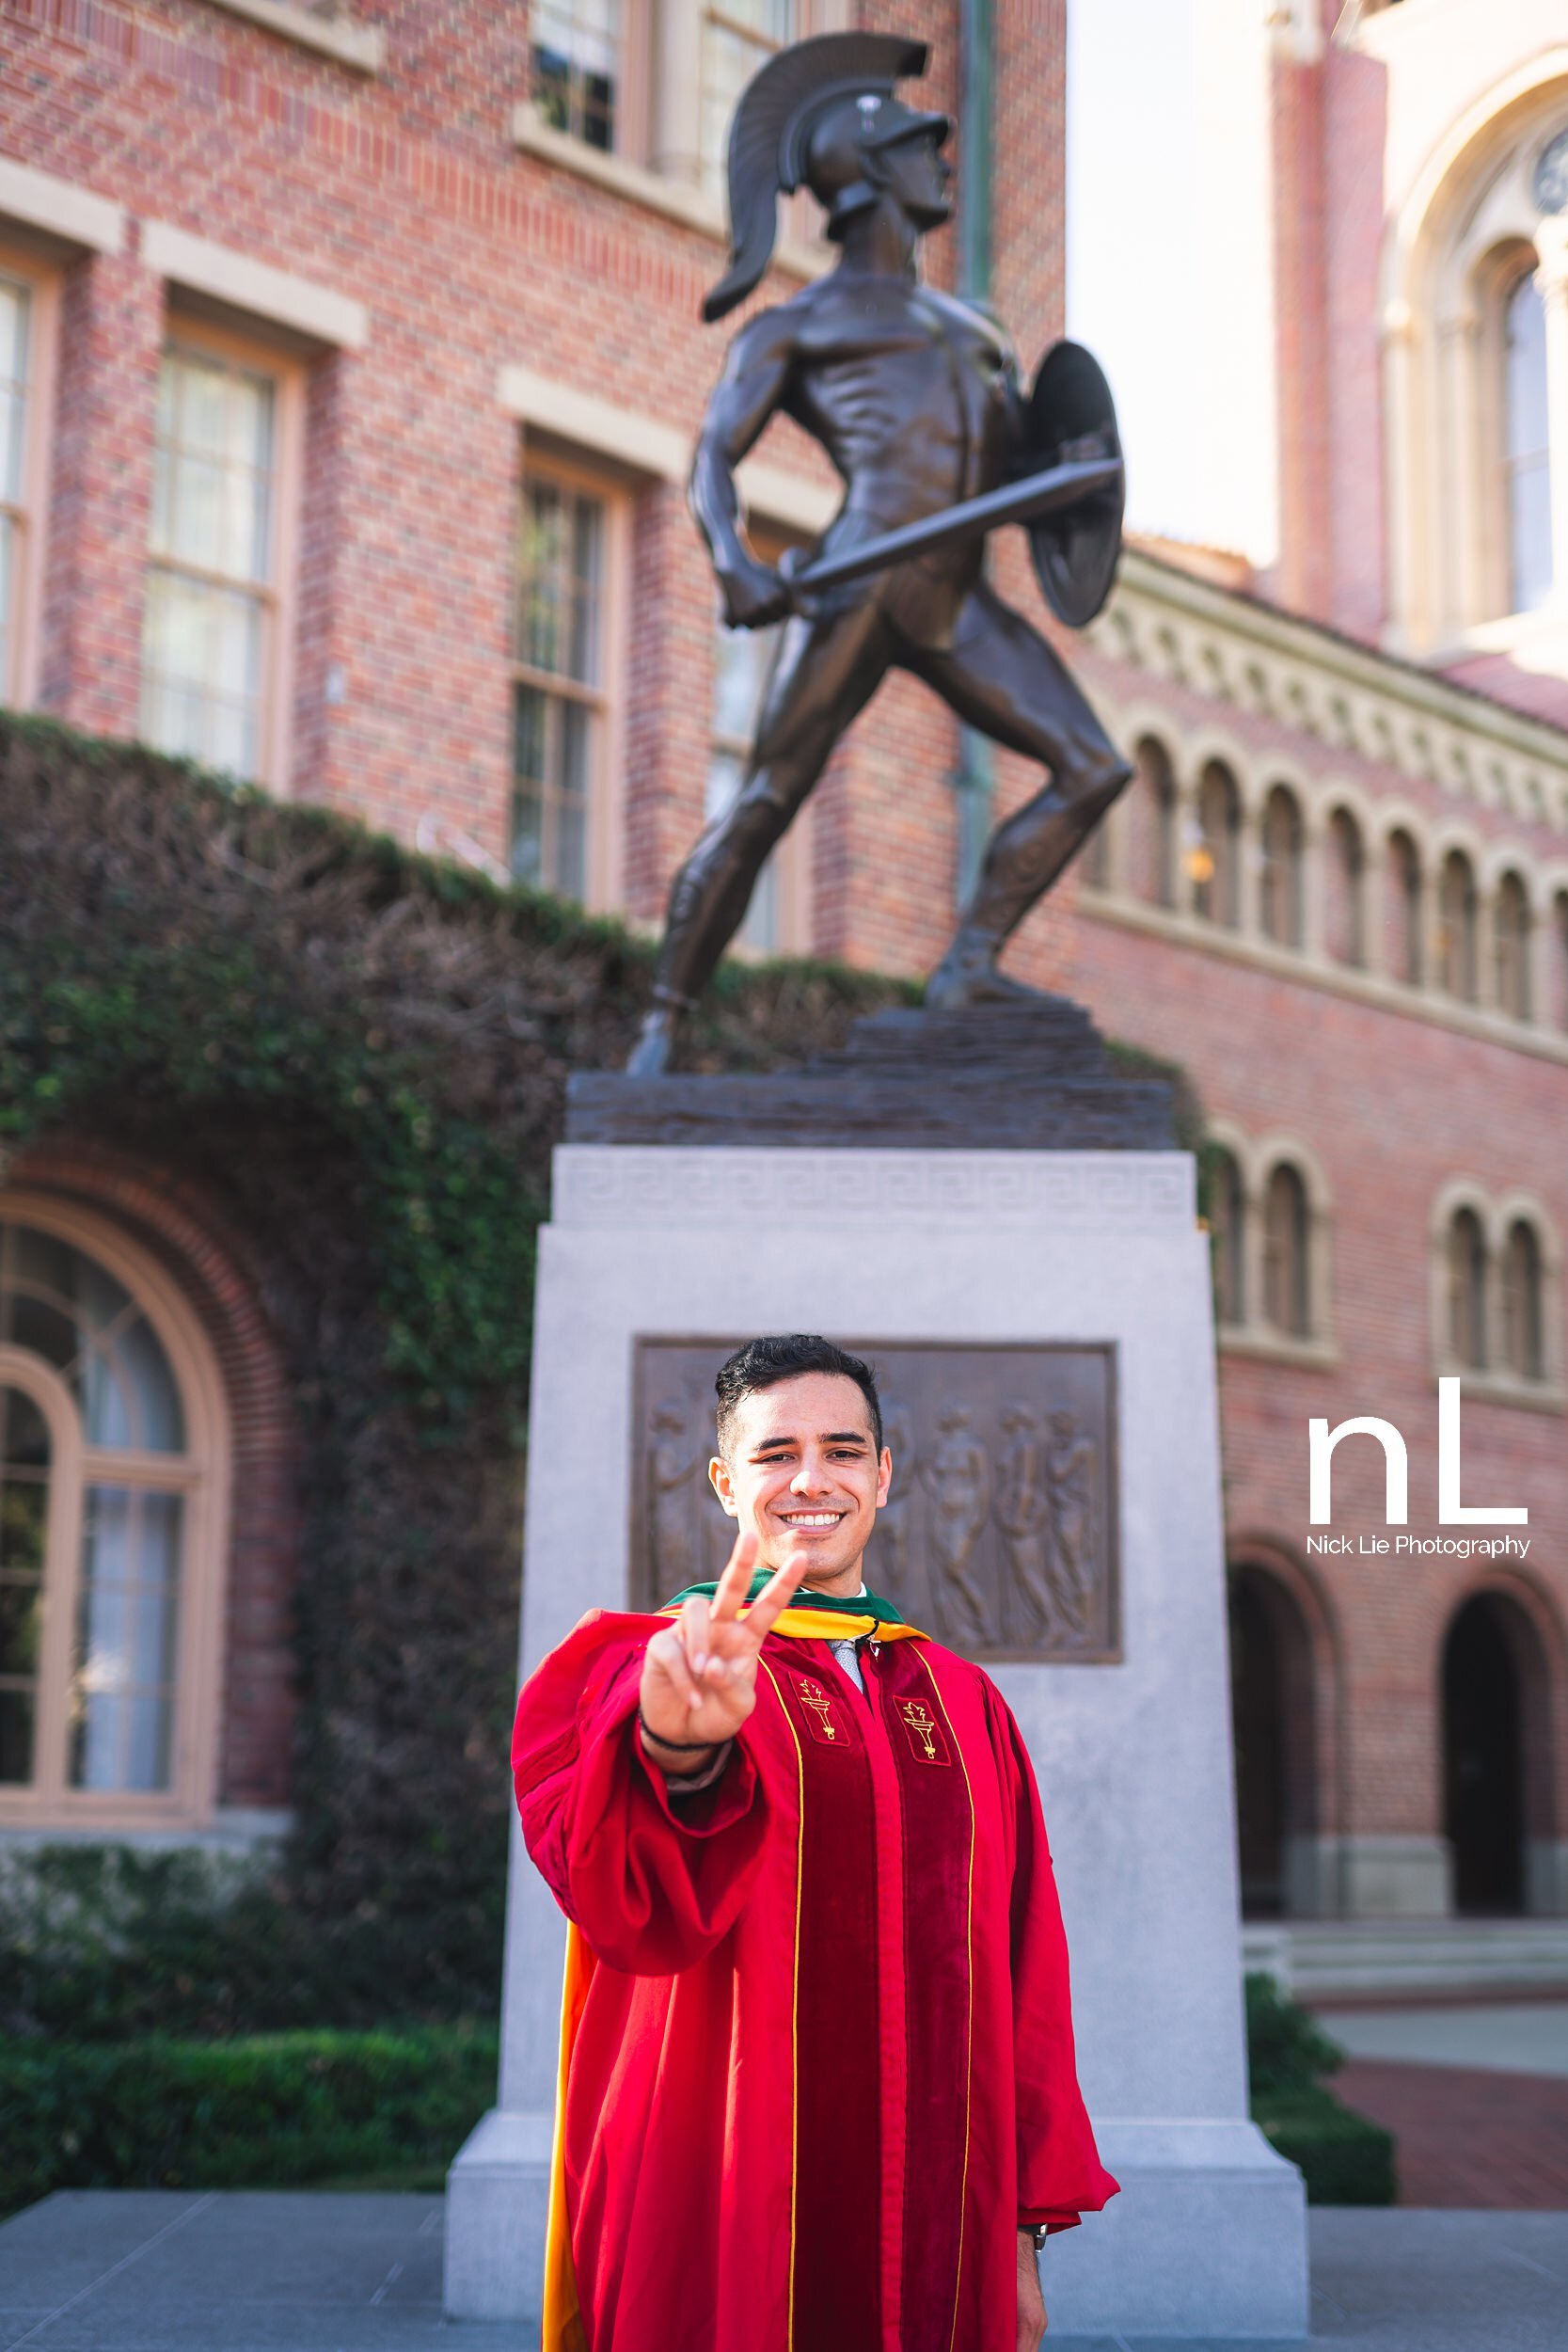 Los Angeles Senior Graduation Portraits - USC UCLA Graduation Photos by Nick Lie Photography